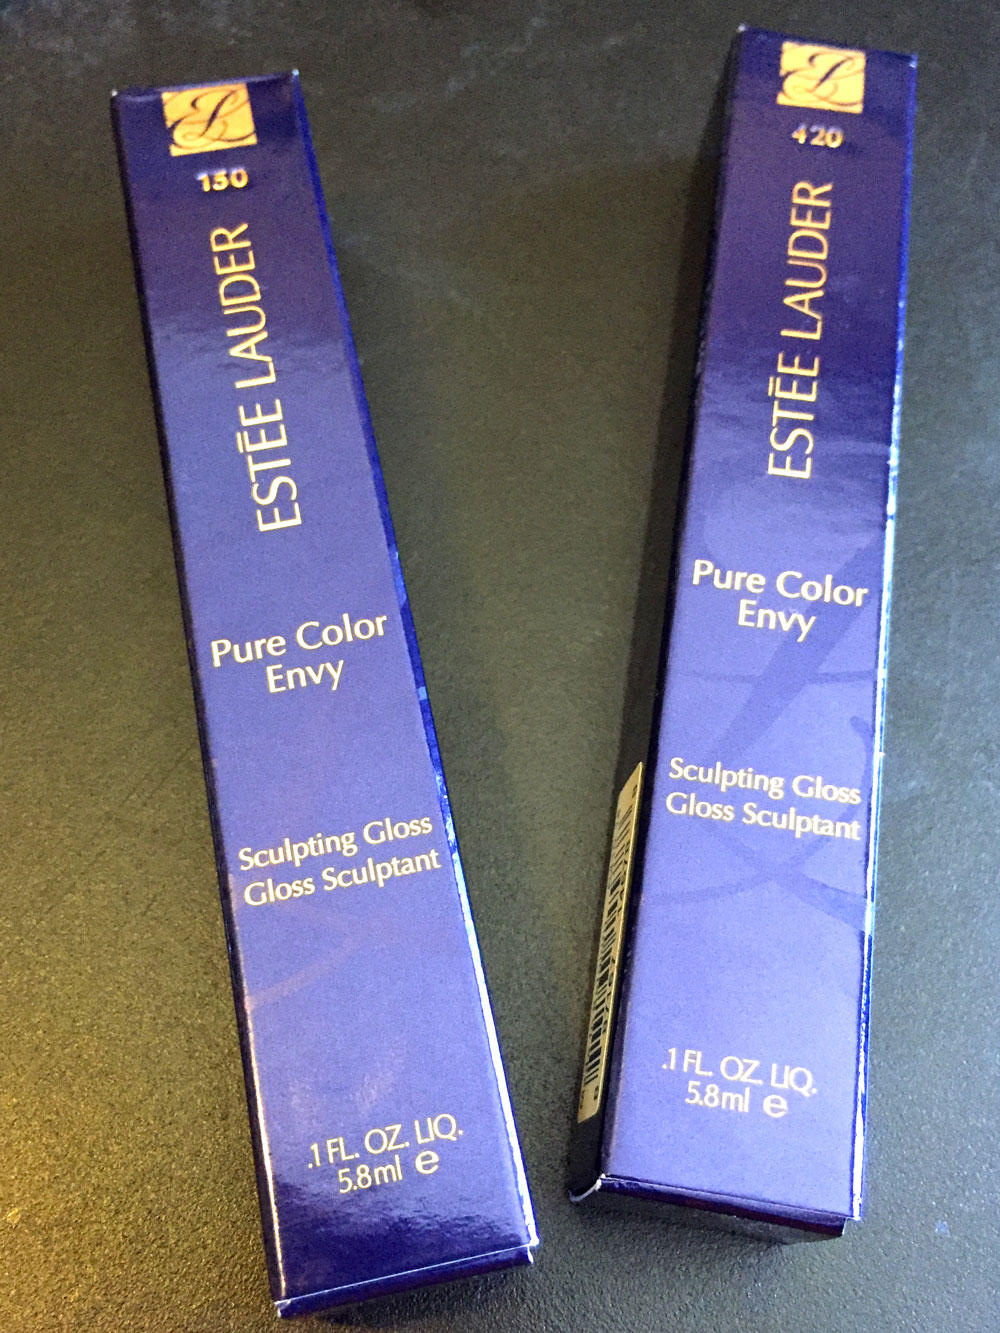 Estee Lauder Pure Color Envy Sculpting Gloss ($26)